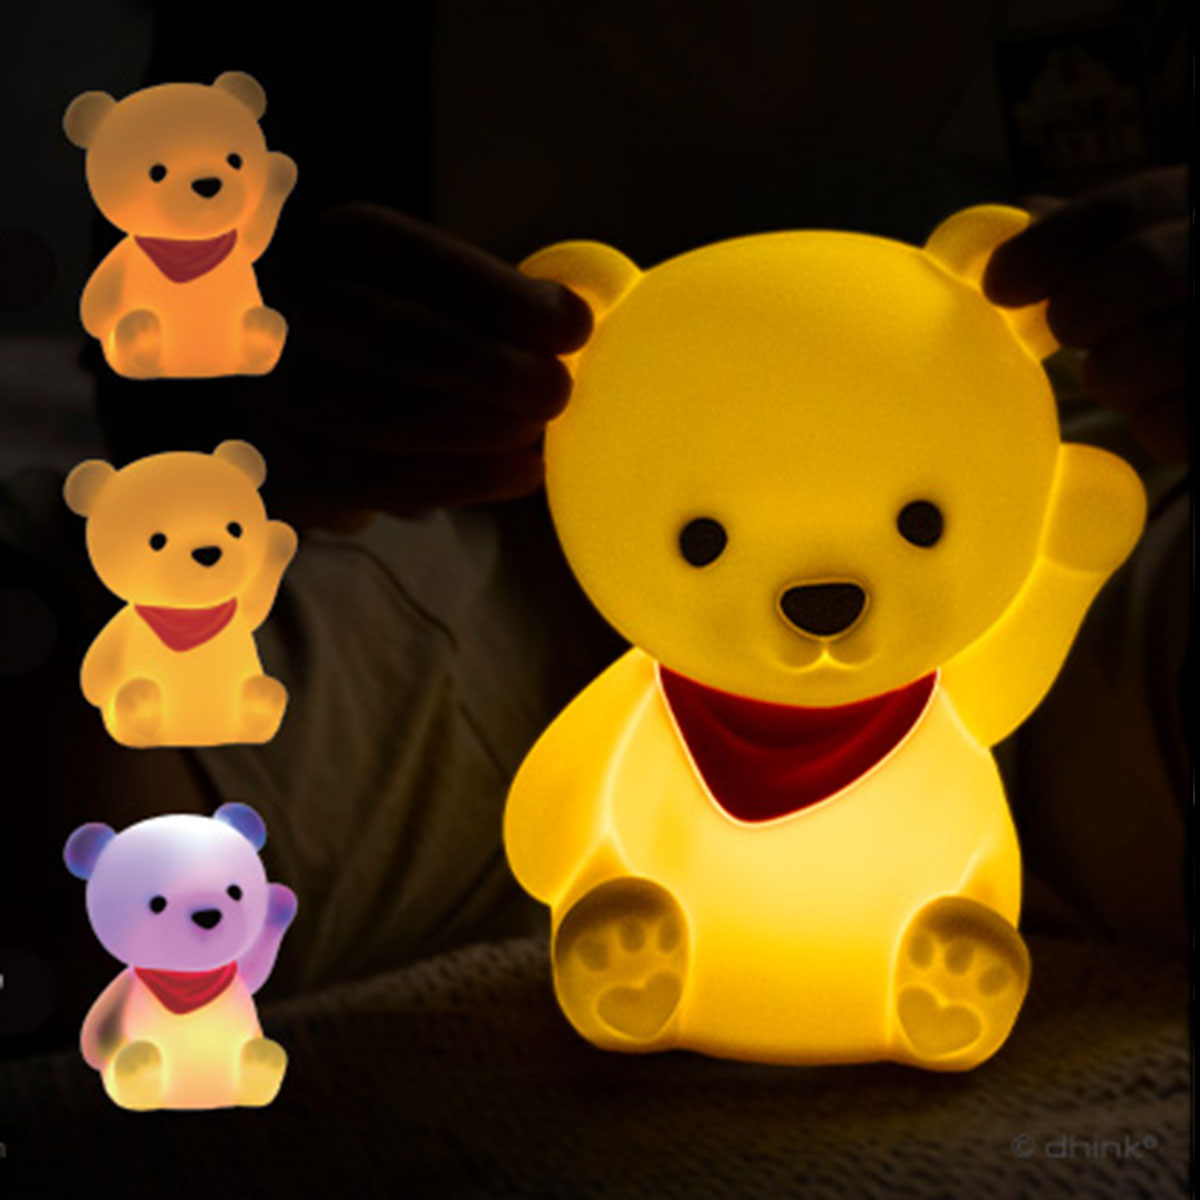 Soft silicone night light - Luke the Bear